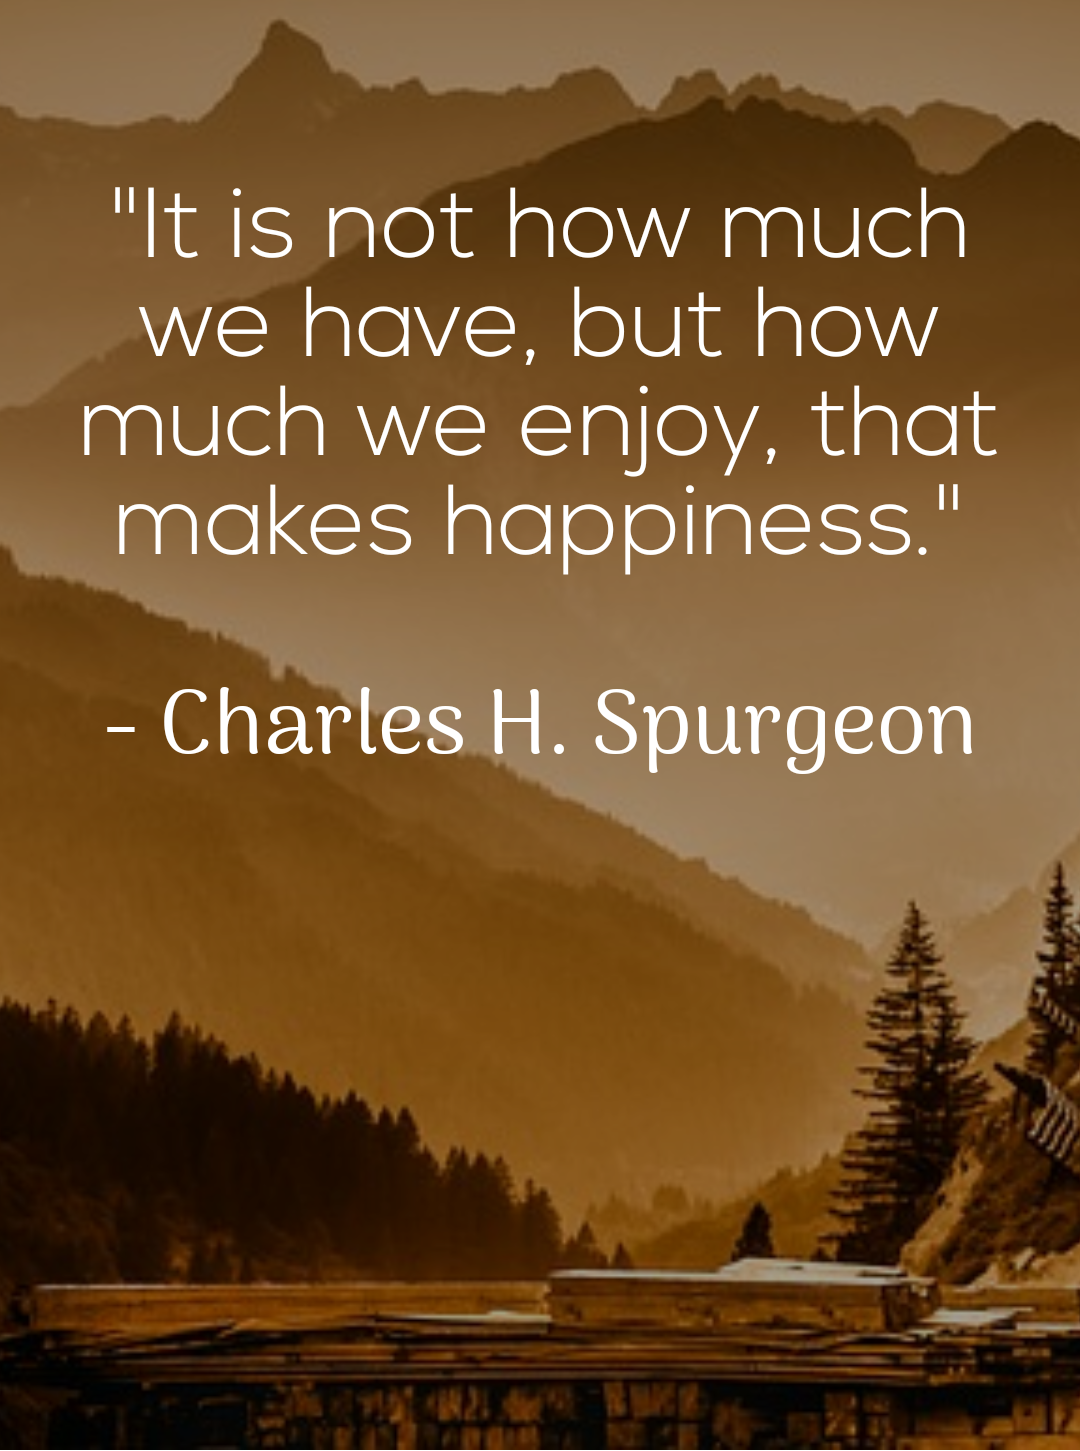 HAPPINESS - Charles H. Spurgeon